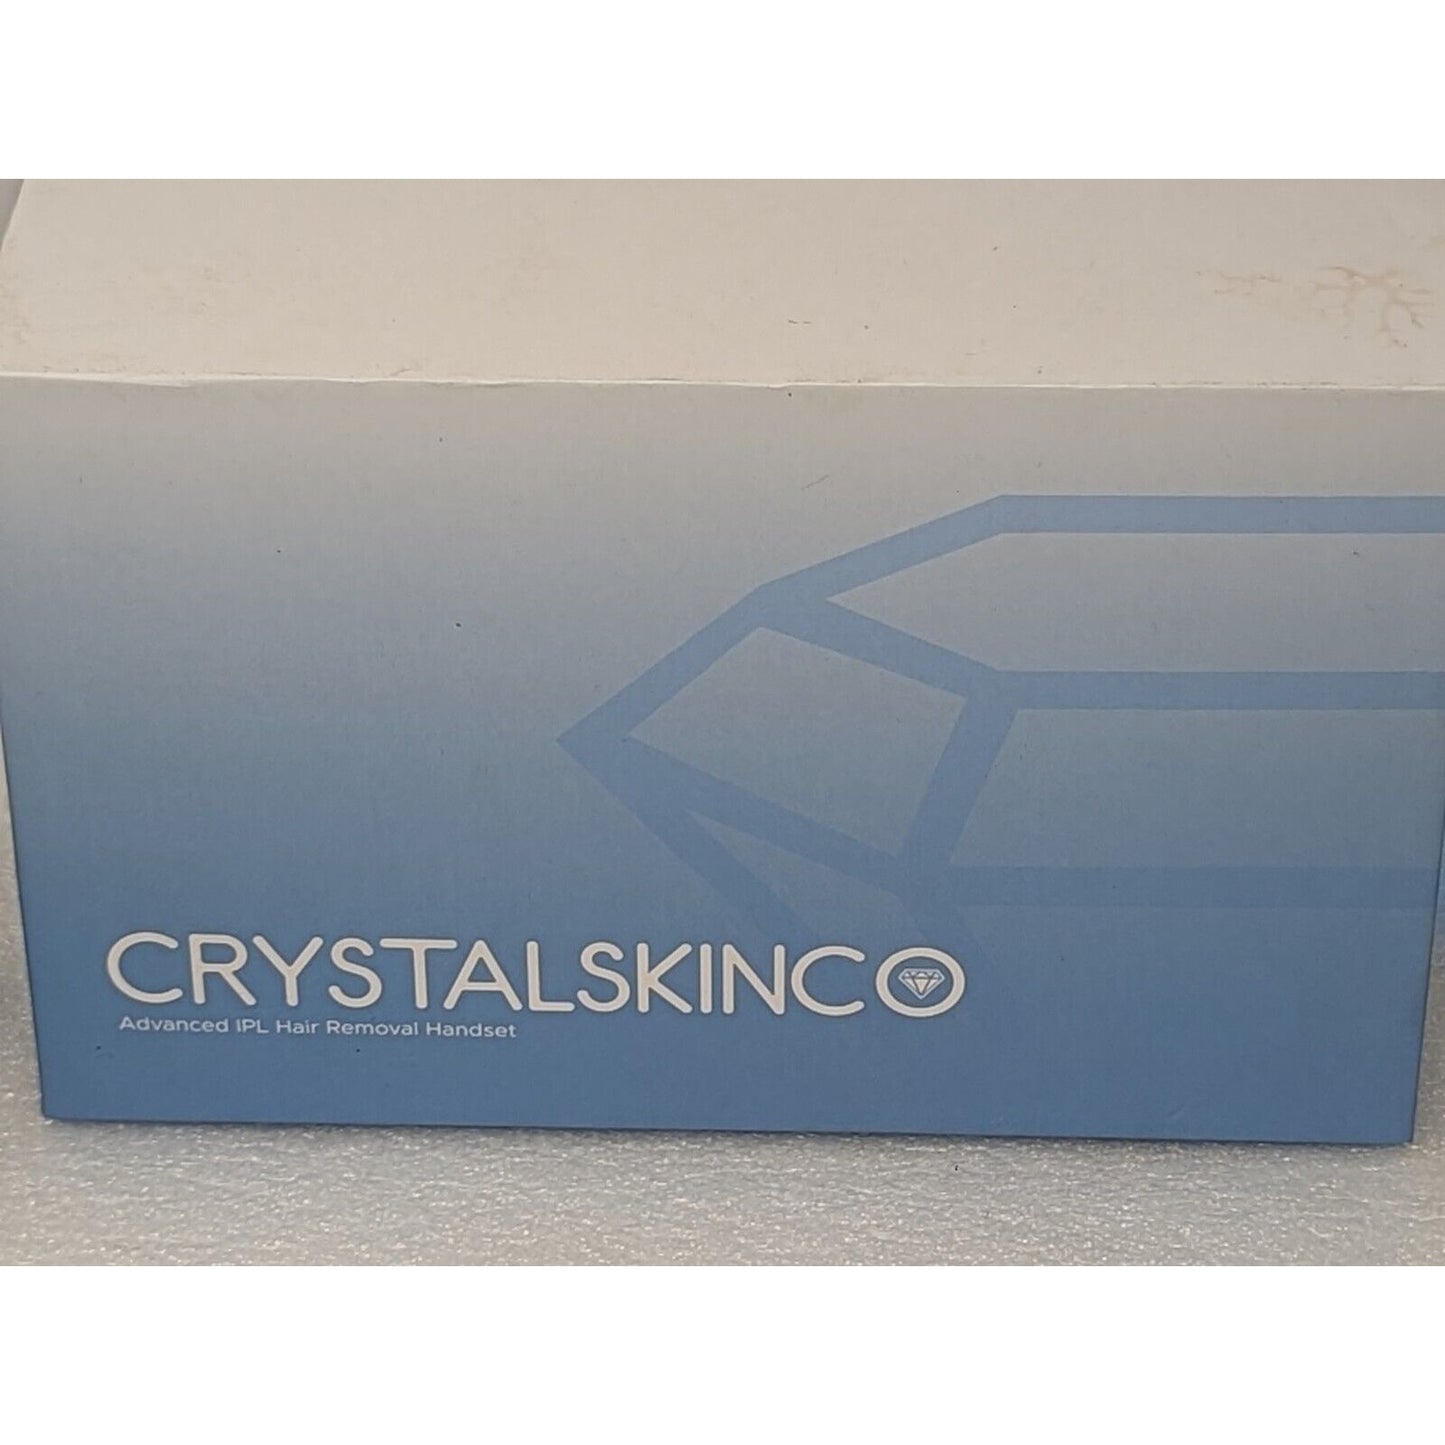 Crystal Skin Co Advanced IPL Hair Removal Handset